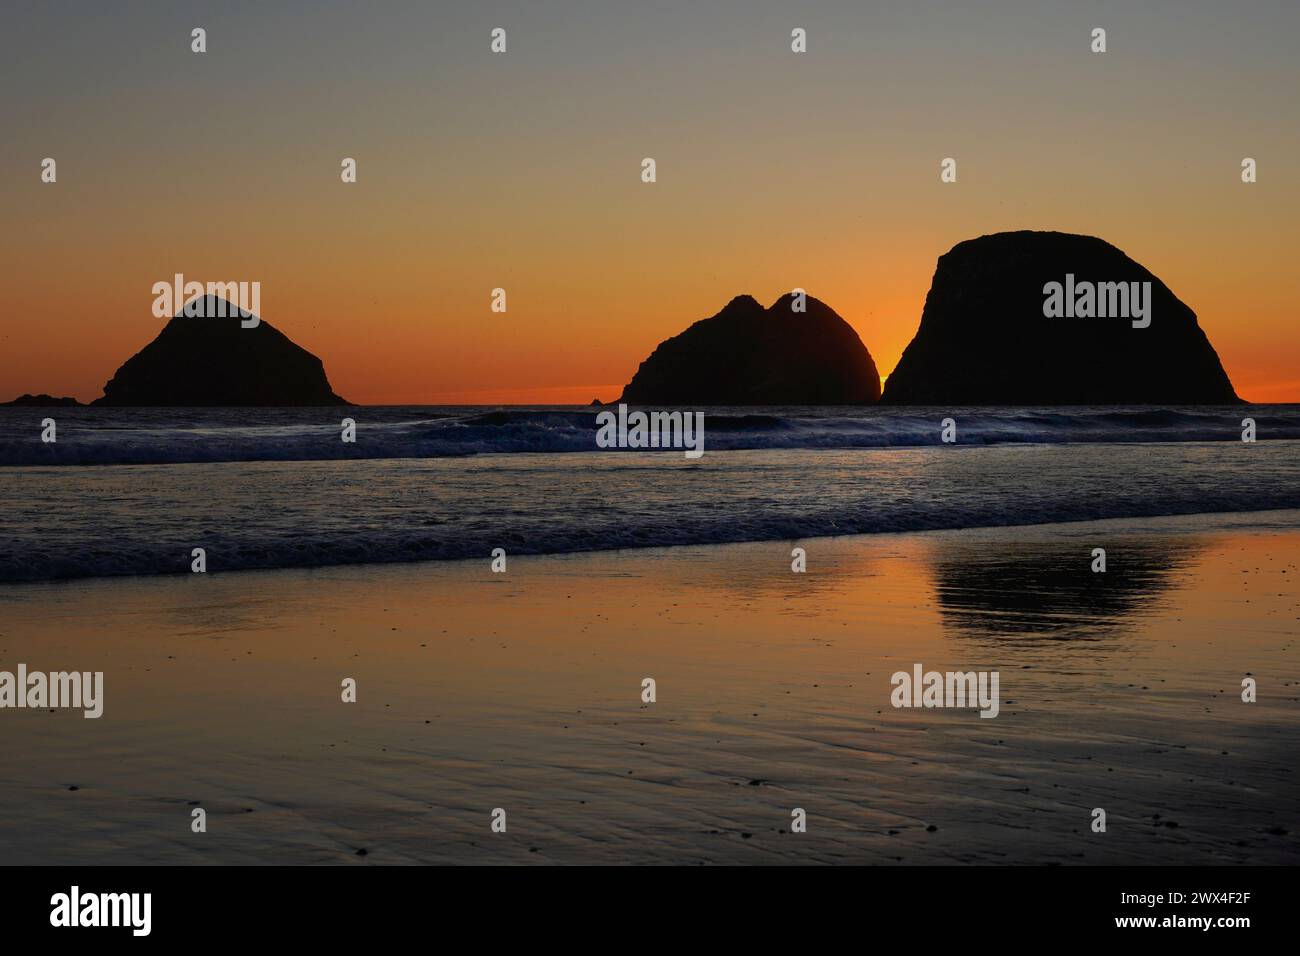 Sunsetting behind three sea stacks on the Oregon coast Stock Photo